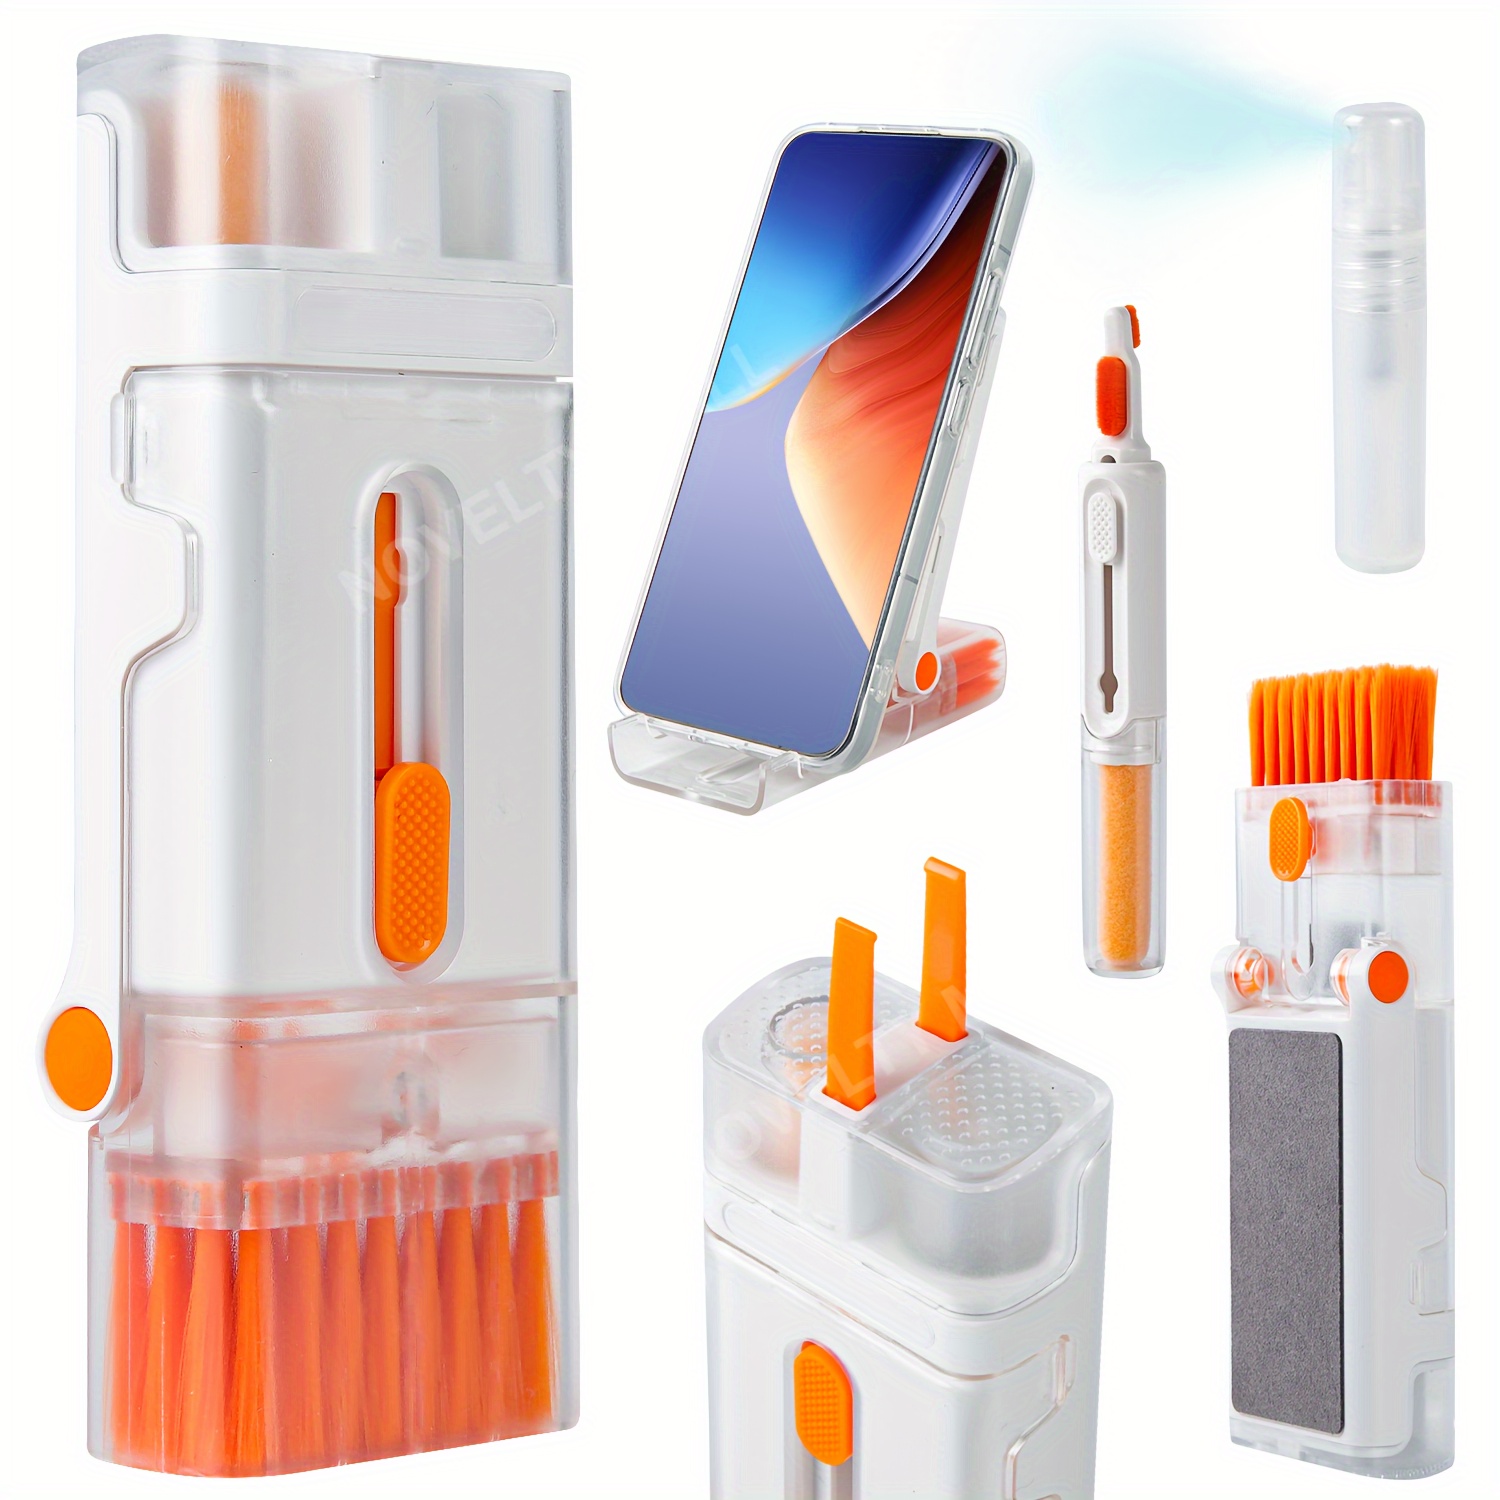 Kit de limpieza de teléfonos móviles para Iphone, Airpods, cámaras